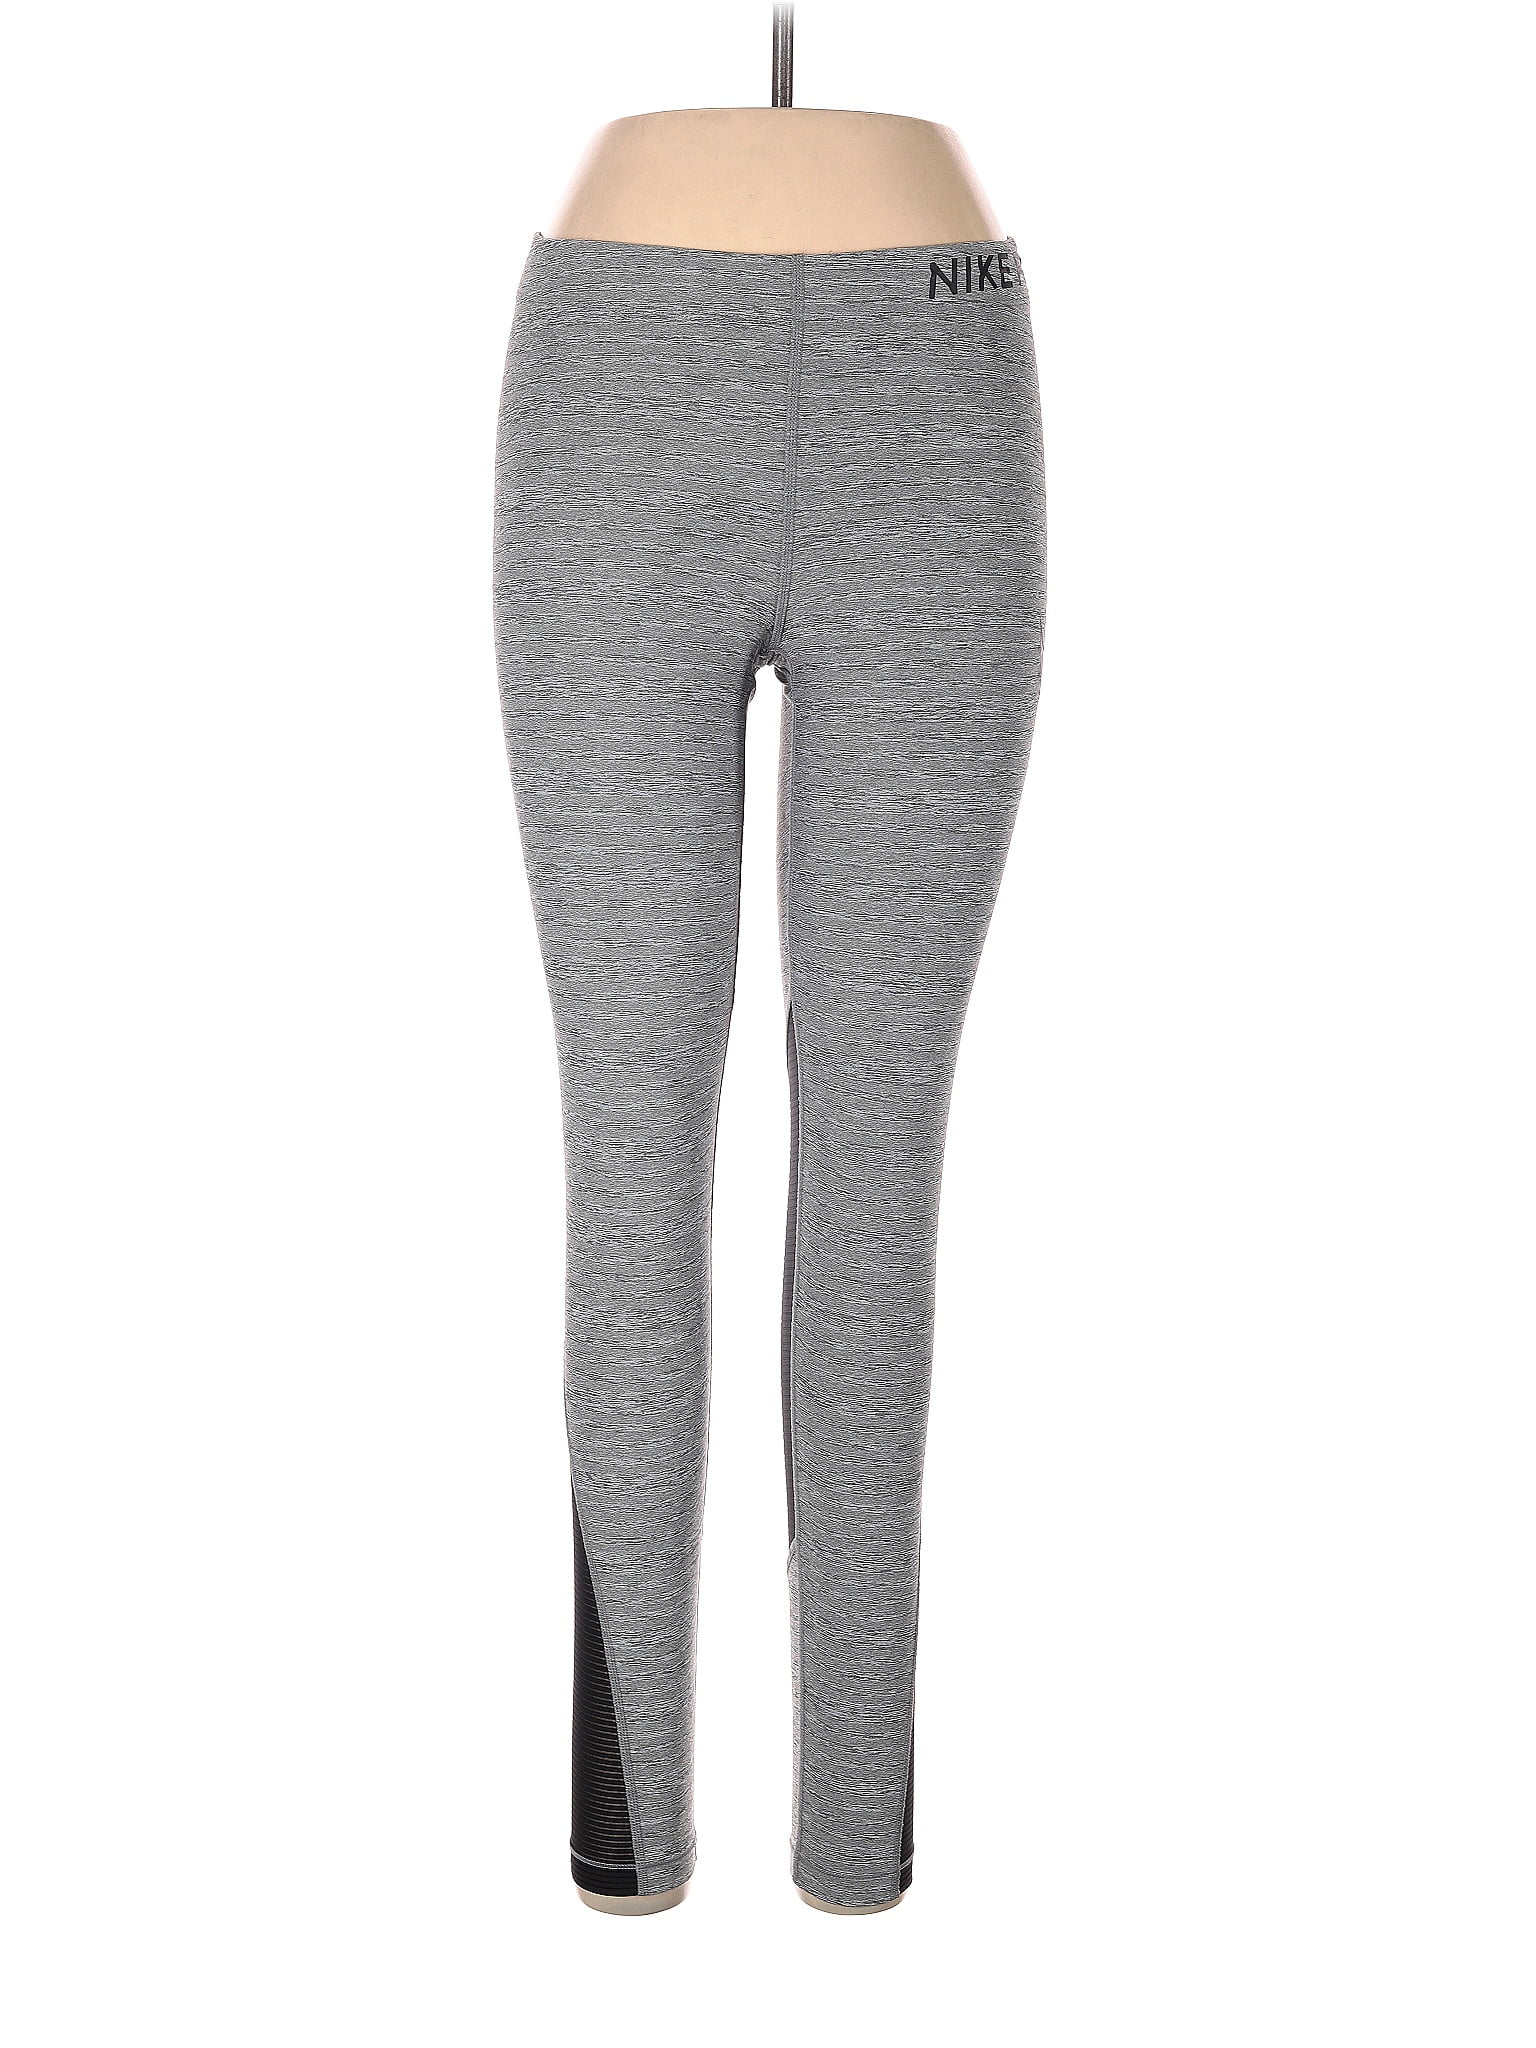 Hollister Sweatpants Size M - $6 (80% Off Retail) - From Jordyn